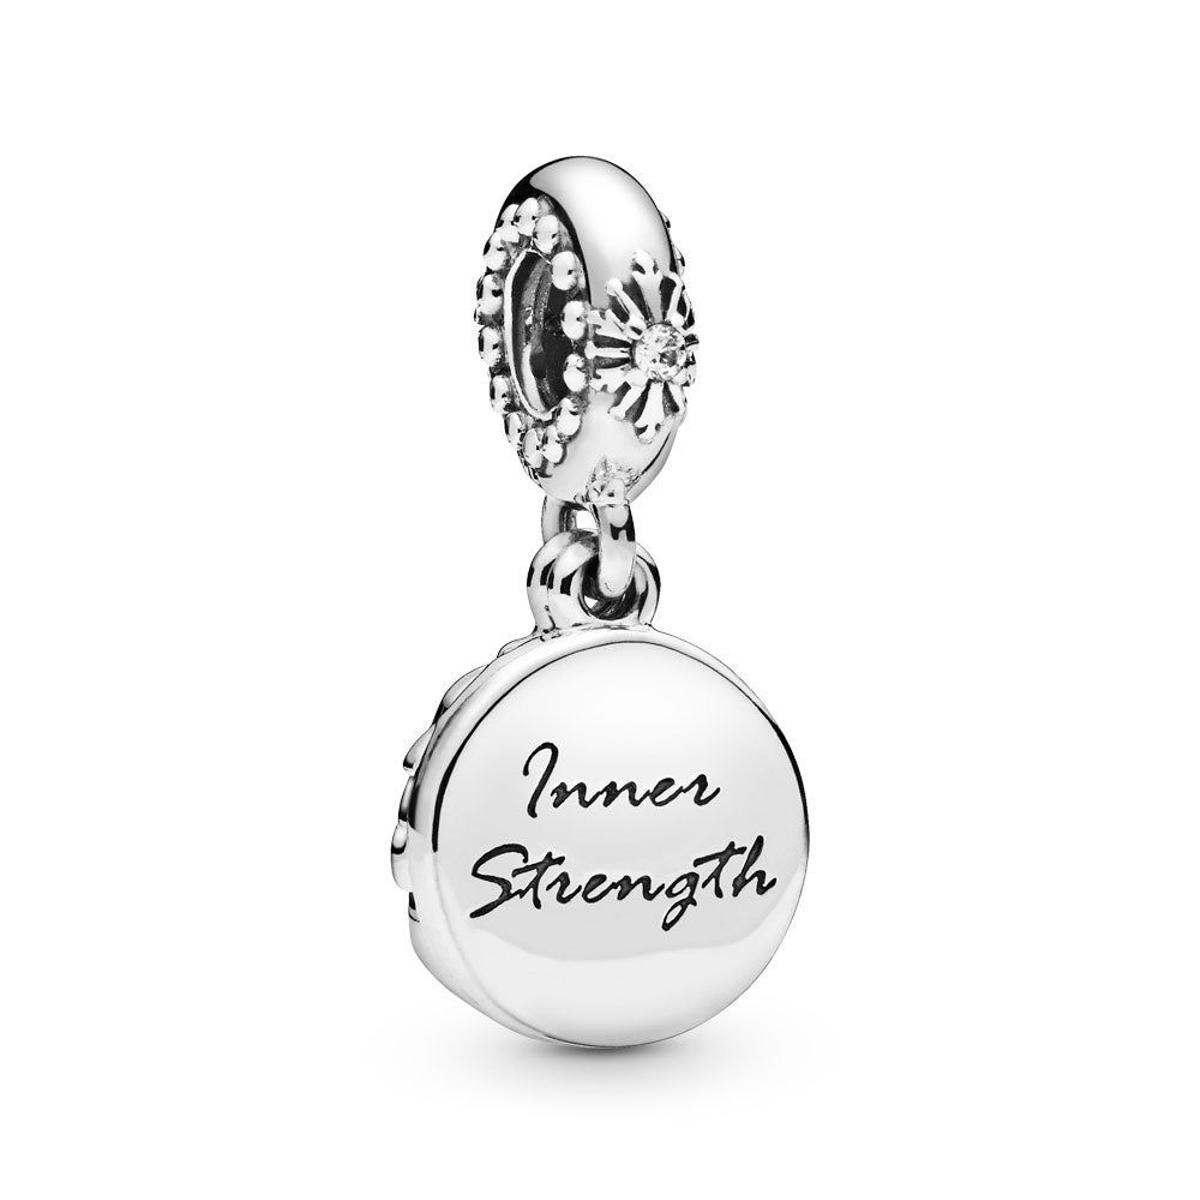 'Charm' de Elsa por detrás con la frase grabada 'Inner Strength' (Precio: 69,00 euros)